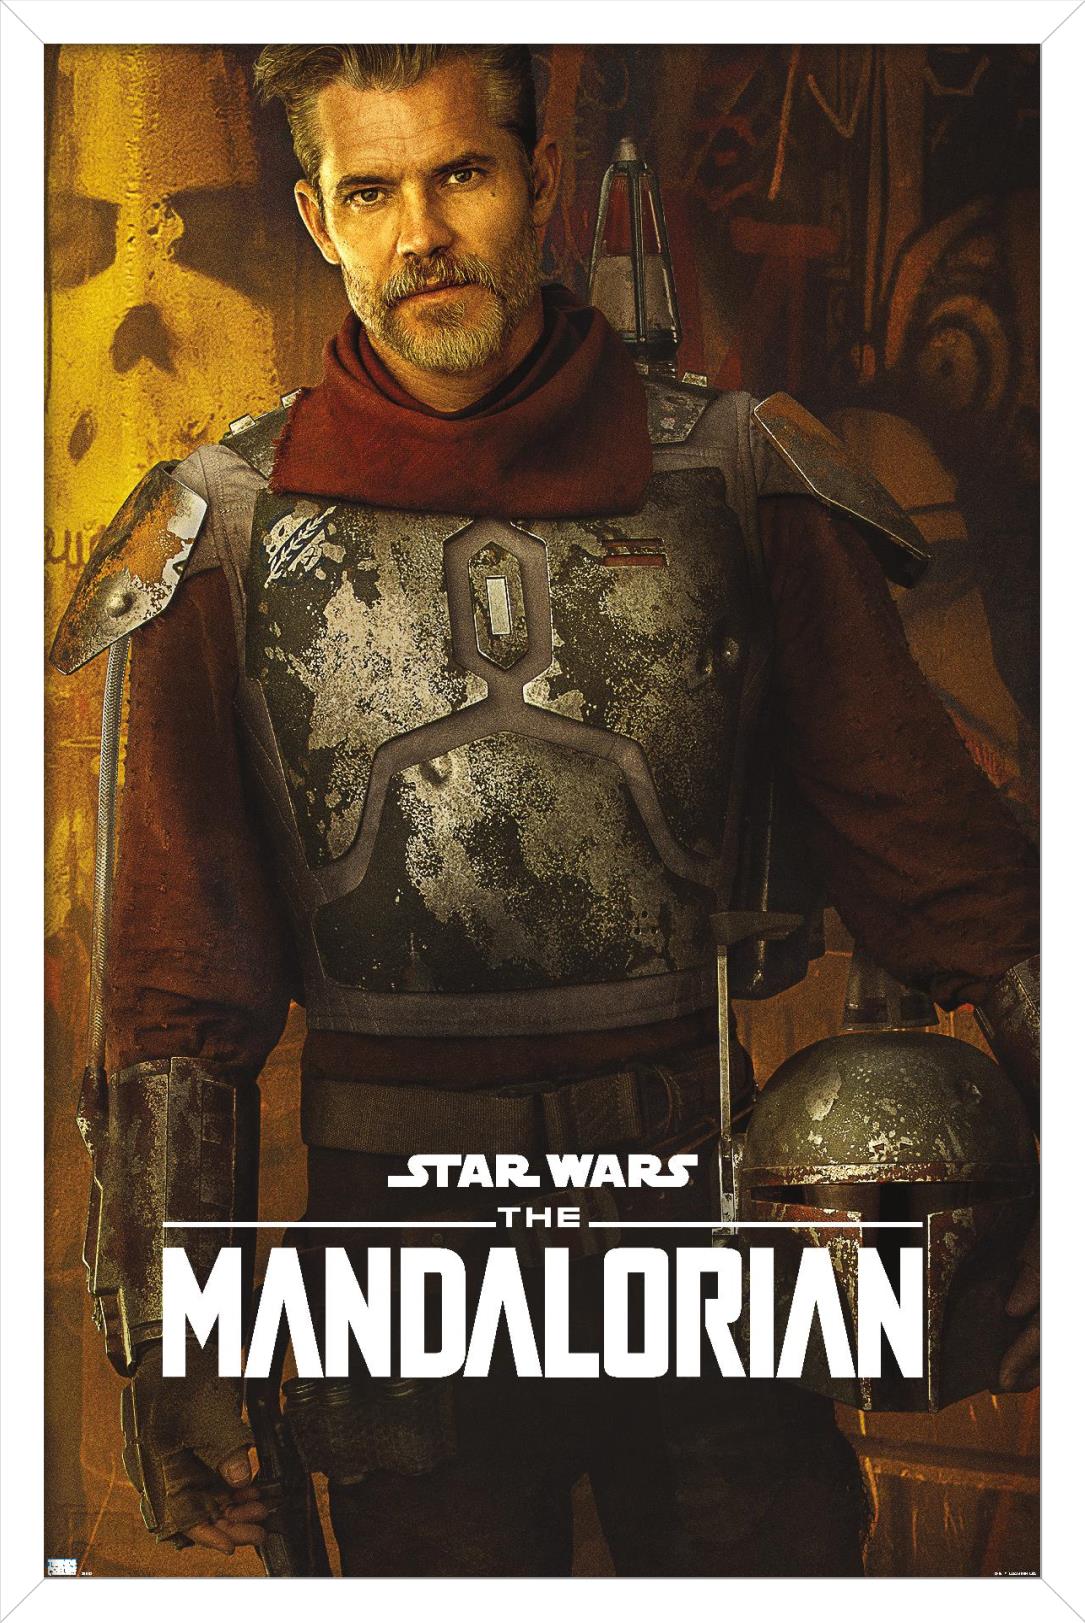 Star Wars: The Mandalorian Season 2 - Cobb Vanth Wall Poster, 14.725" x 22.375", Framed - image 1 of 5